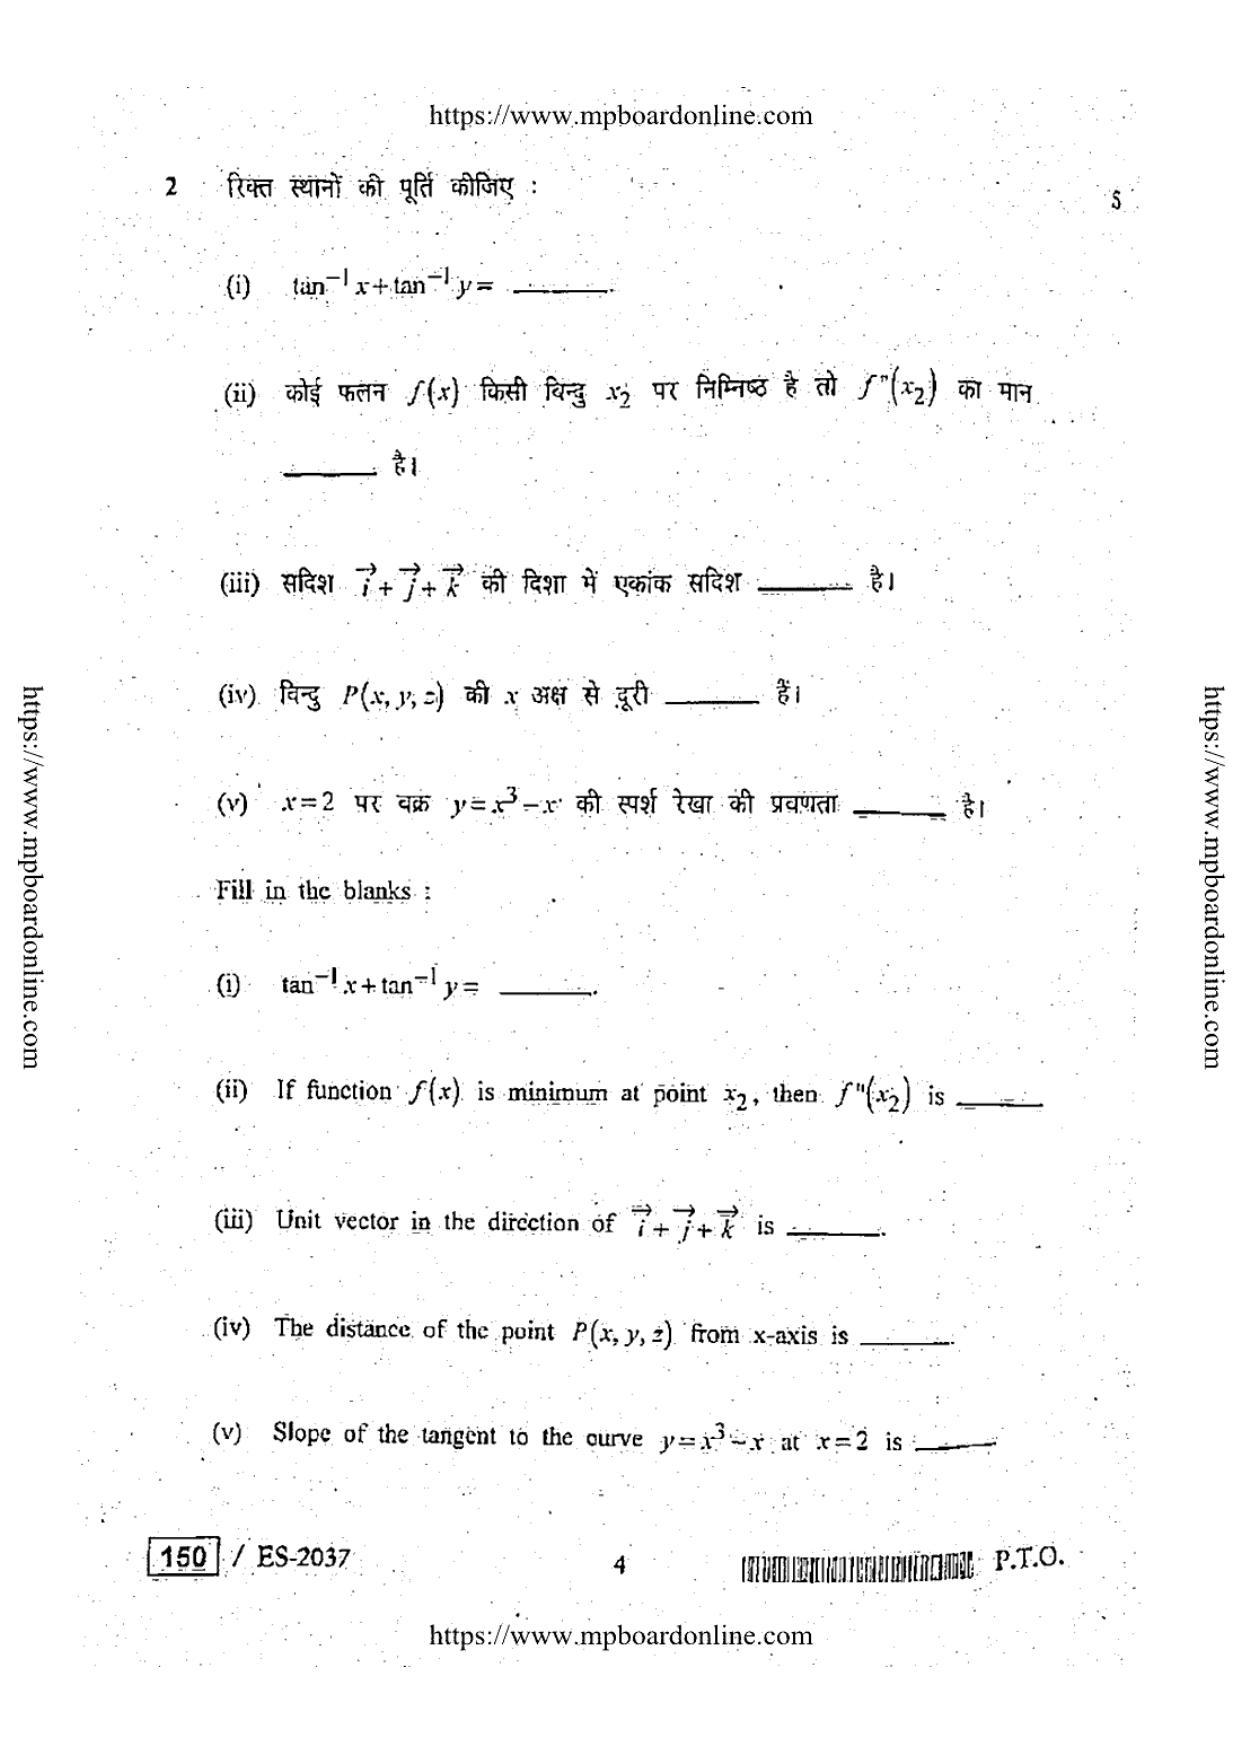 MP Board Class 12 Mathematica 2019 Question Paper - Page 3